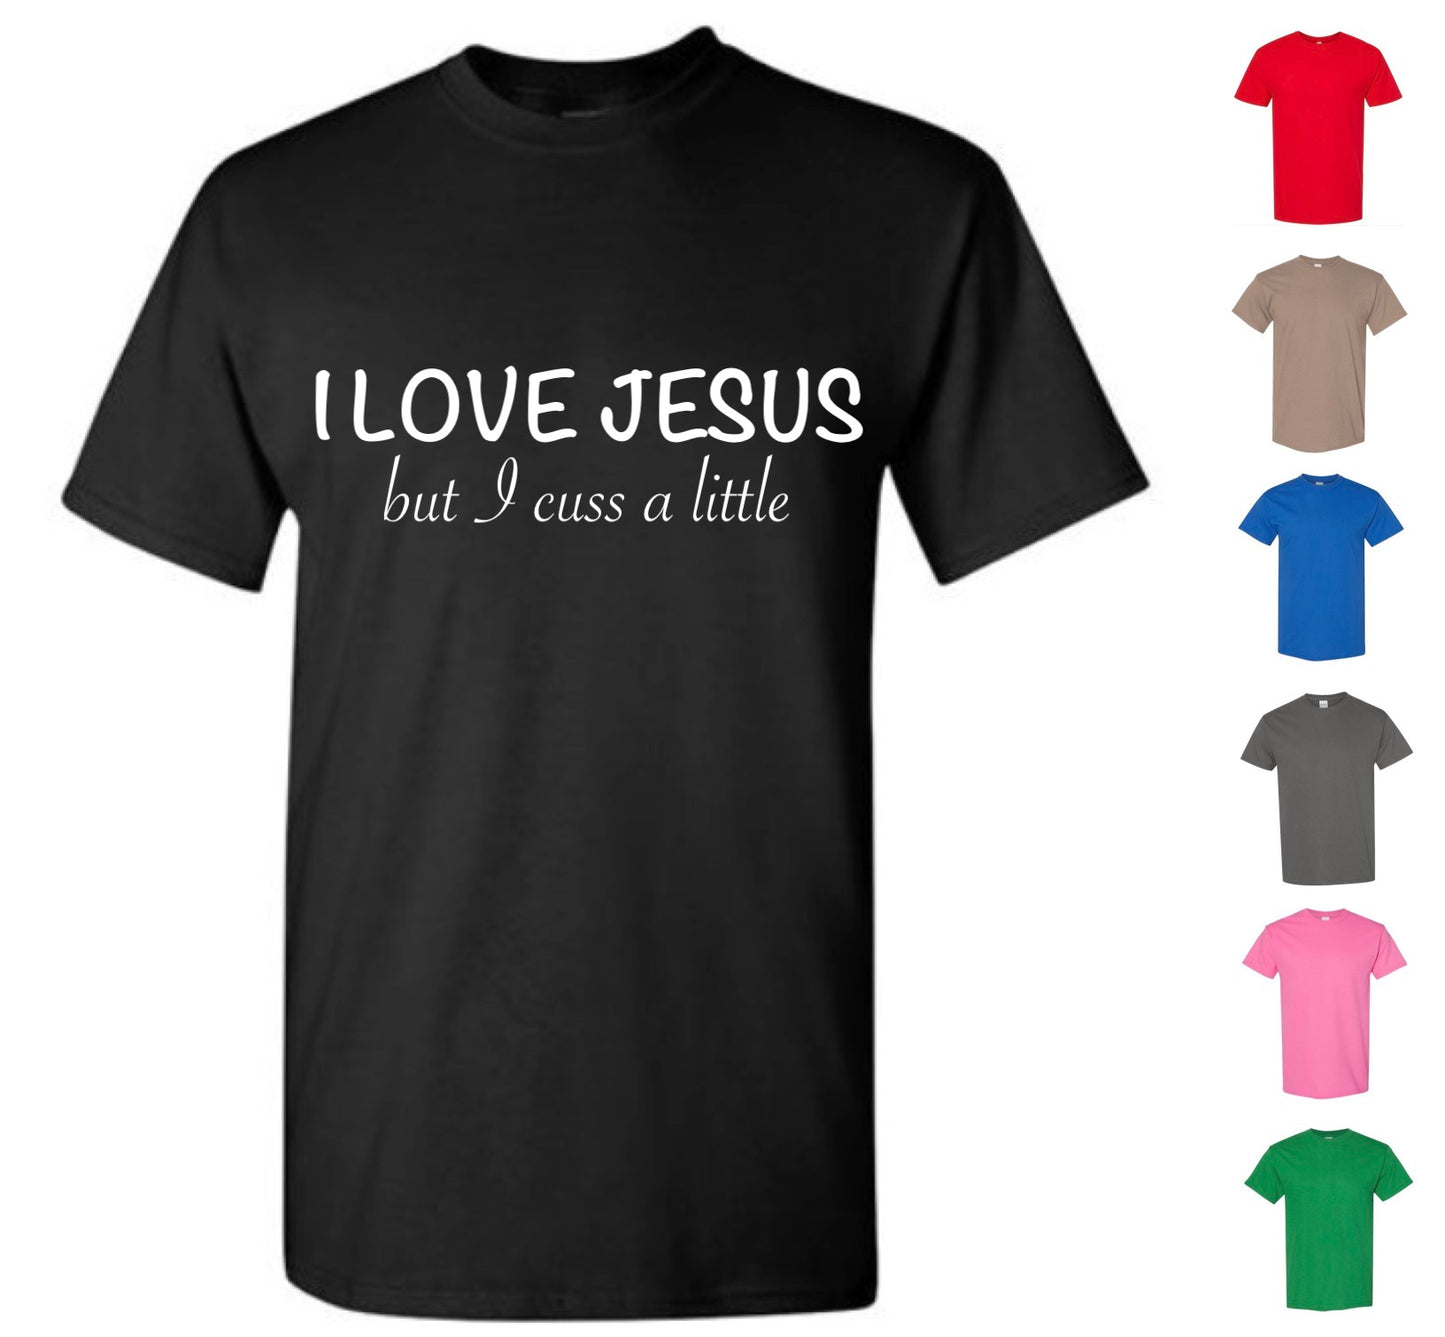 I love Jesus, but I cuss a little T-shirt (FREE Shipping)